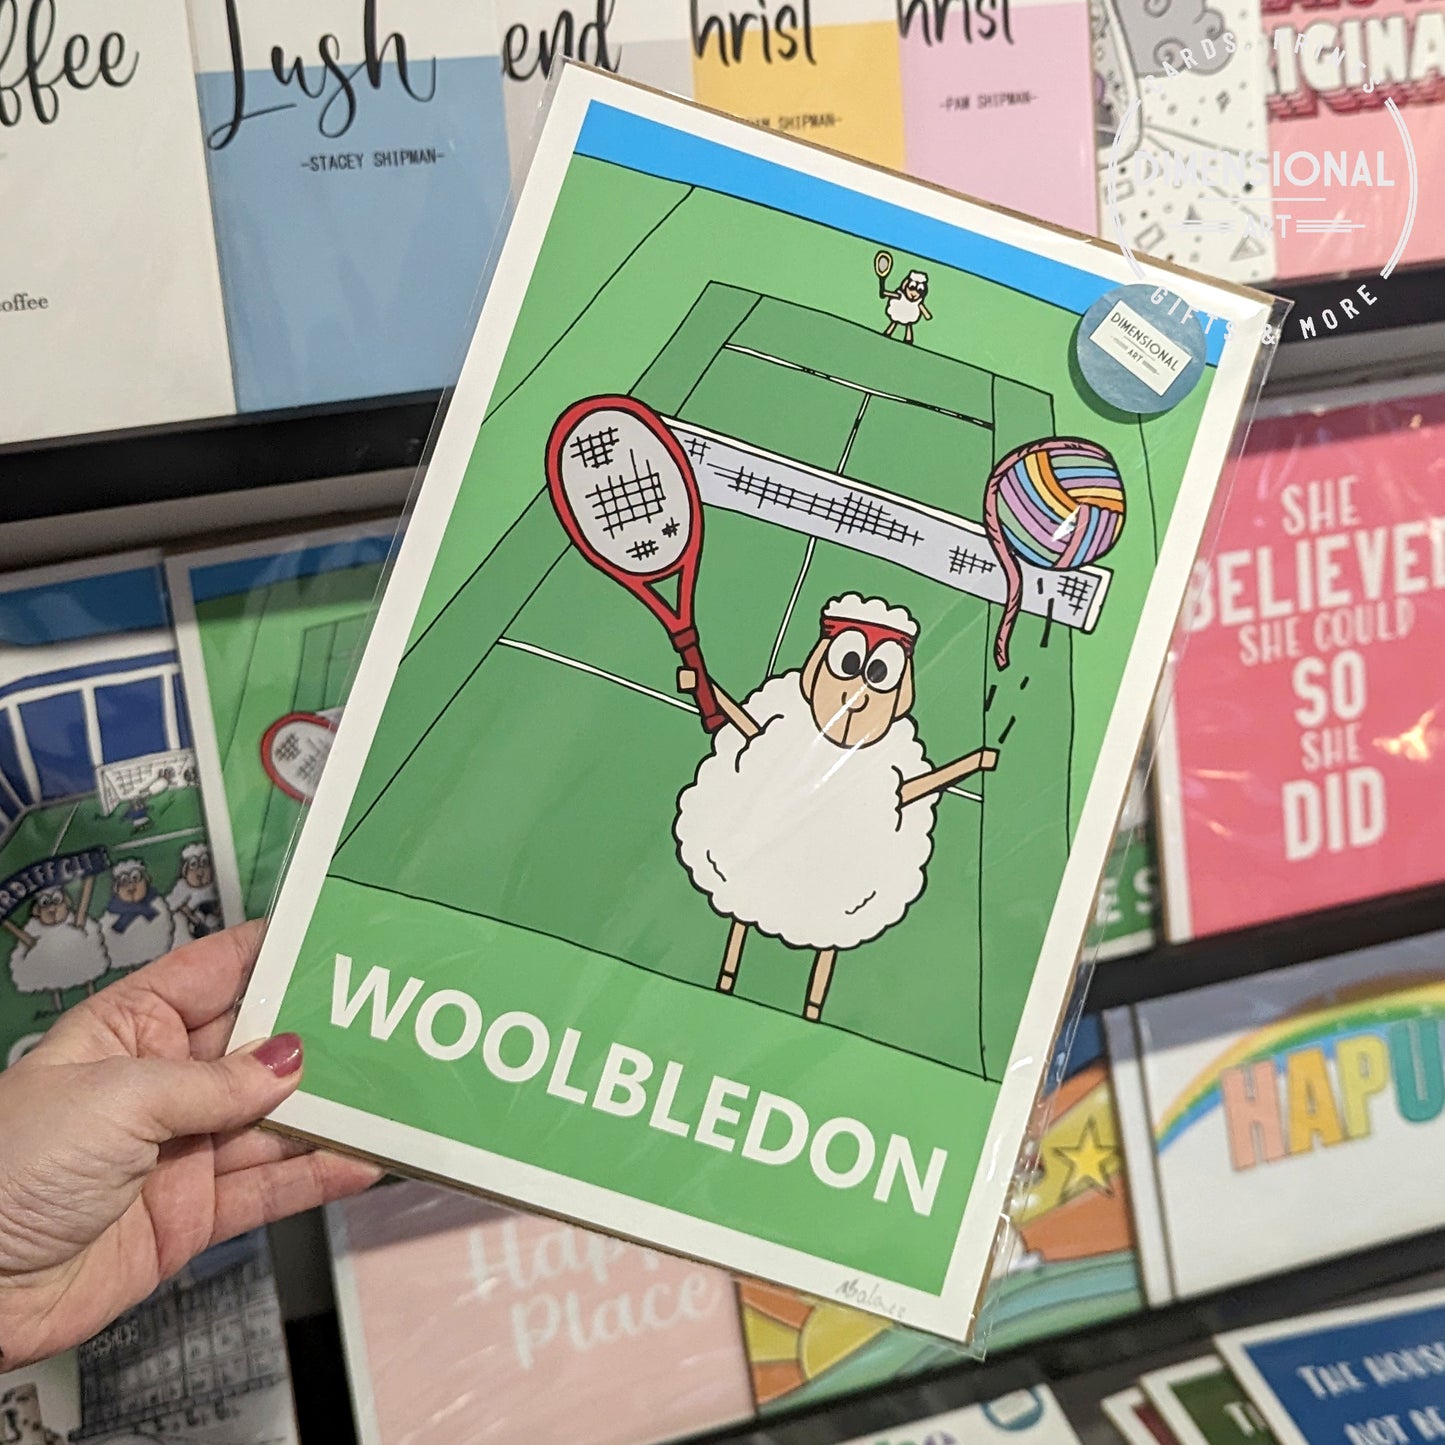 Woolbledon Tennis Sheep A4 Print